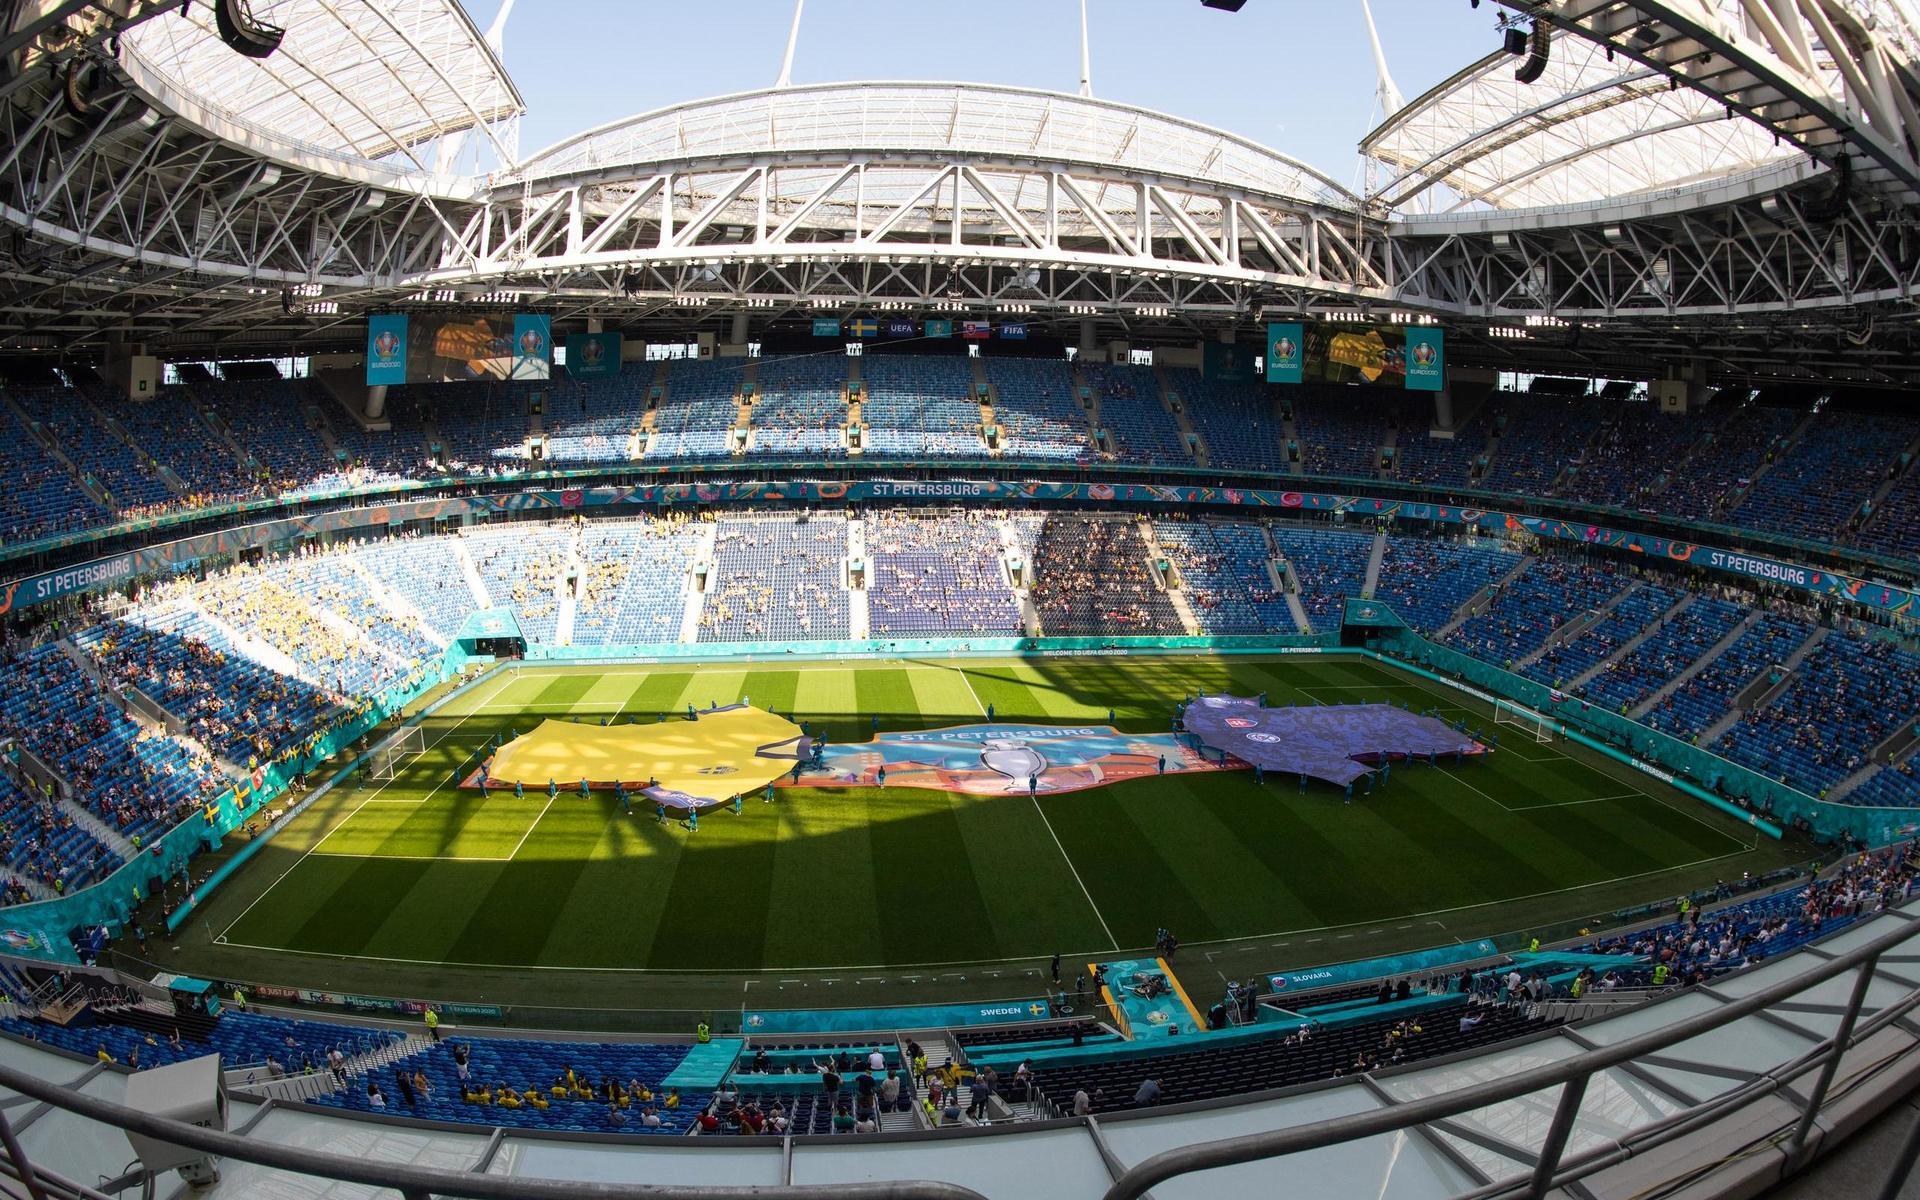 Saint Petersburg Stadium during the UEFA Euro 2020 Football Championship match between Sweden and Slovakia on June 18, 2021 in Saint Petersburg. 